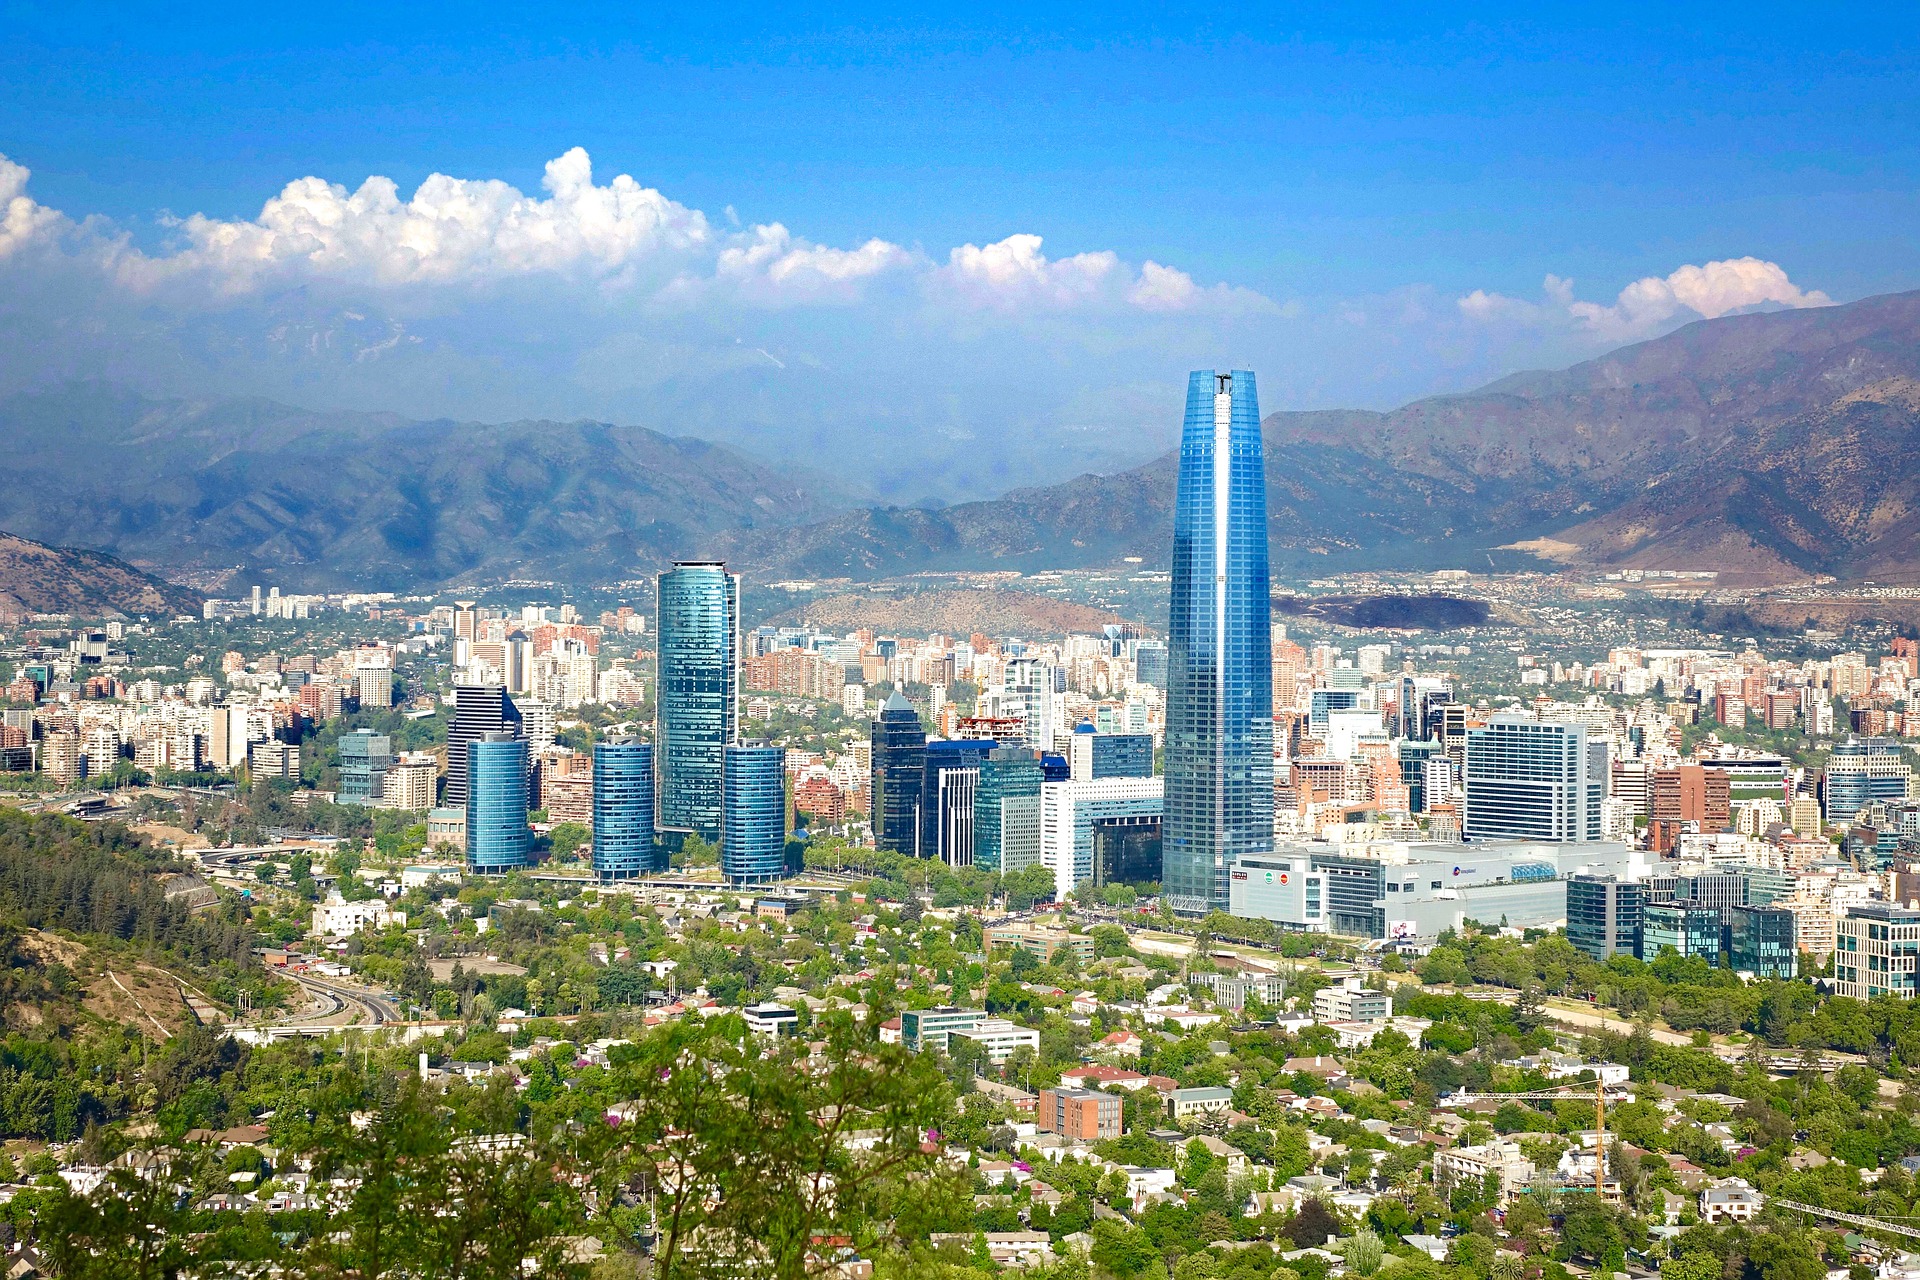 InvestChile in Santiago, Chile